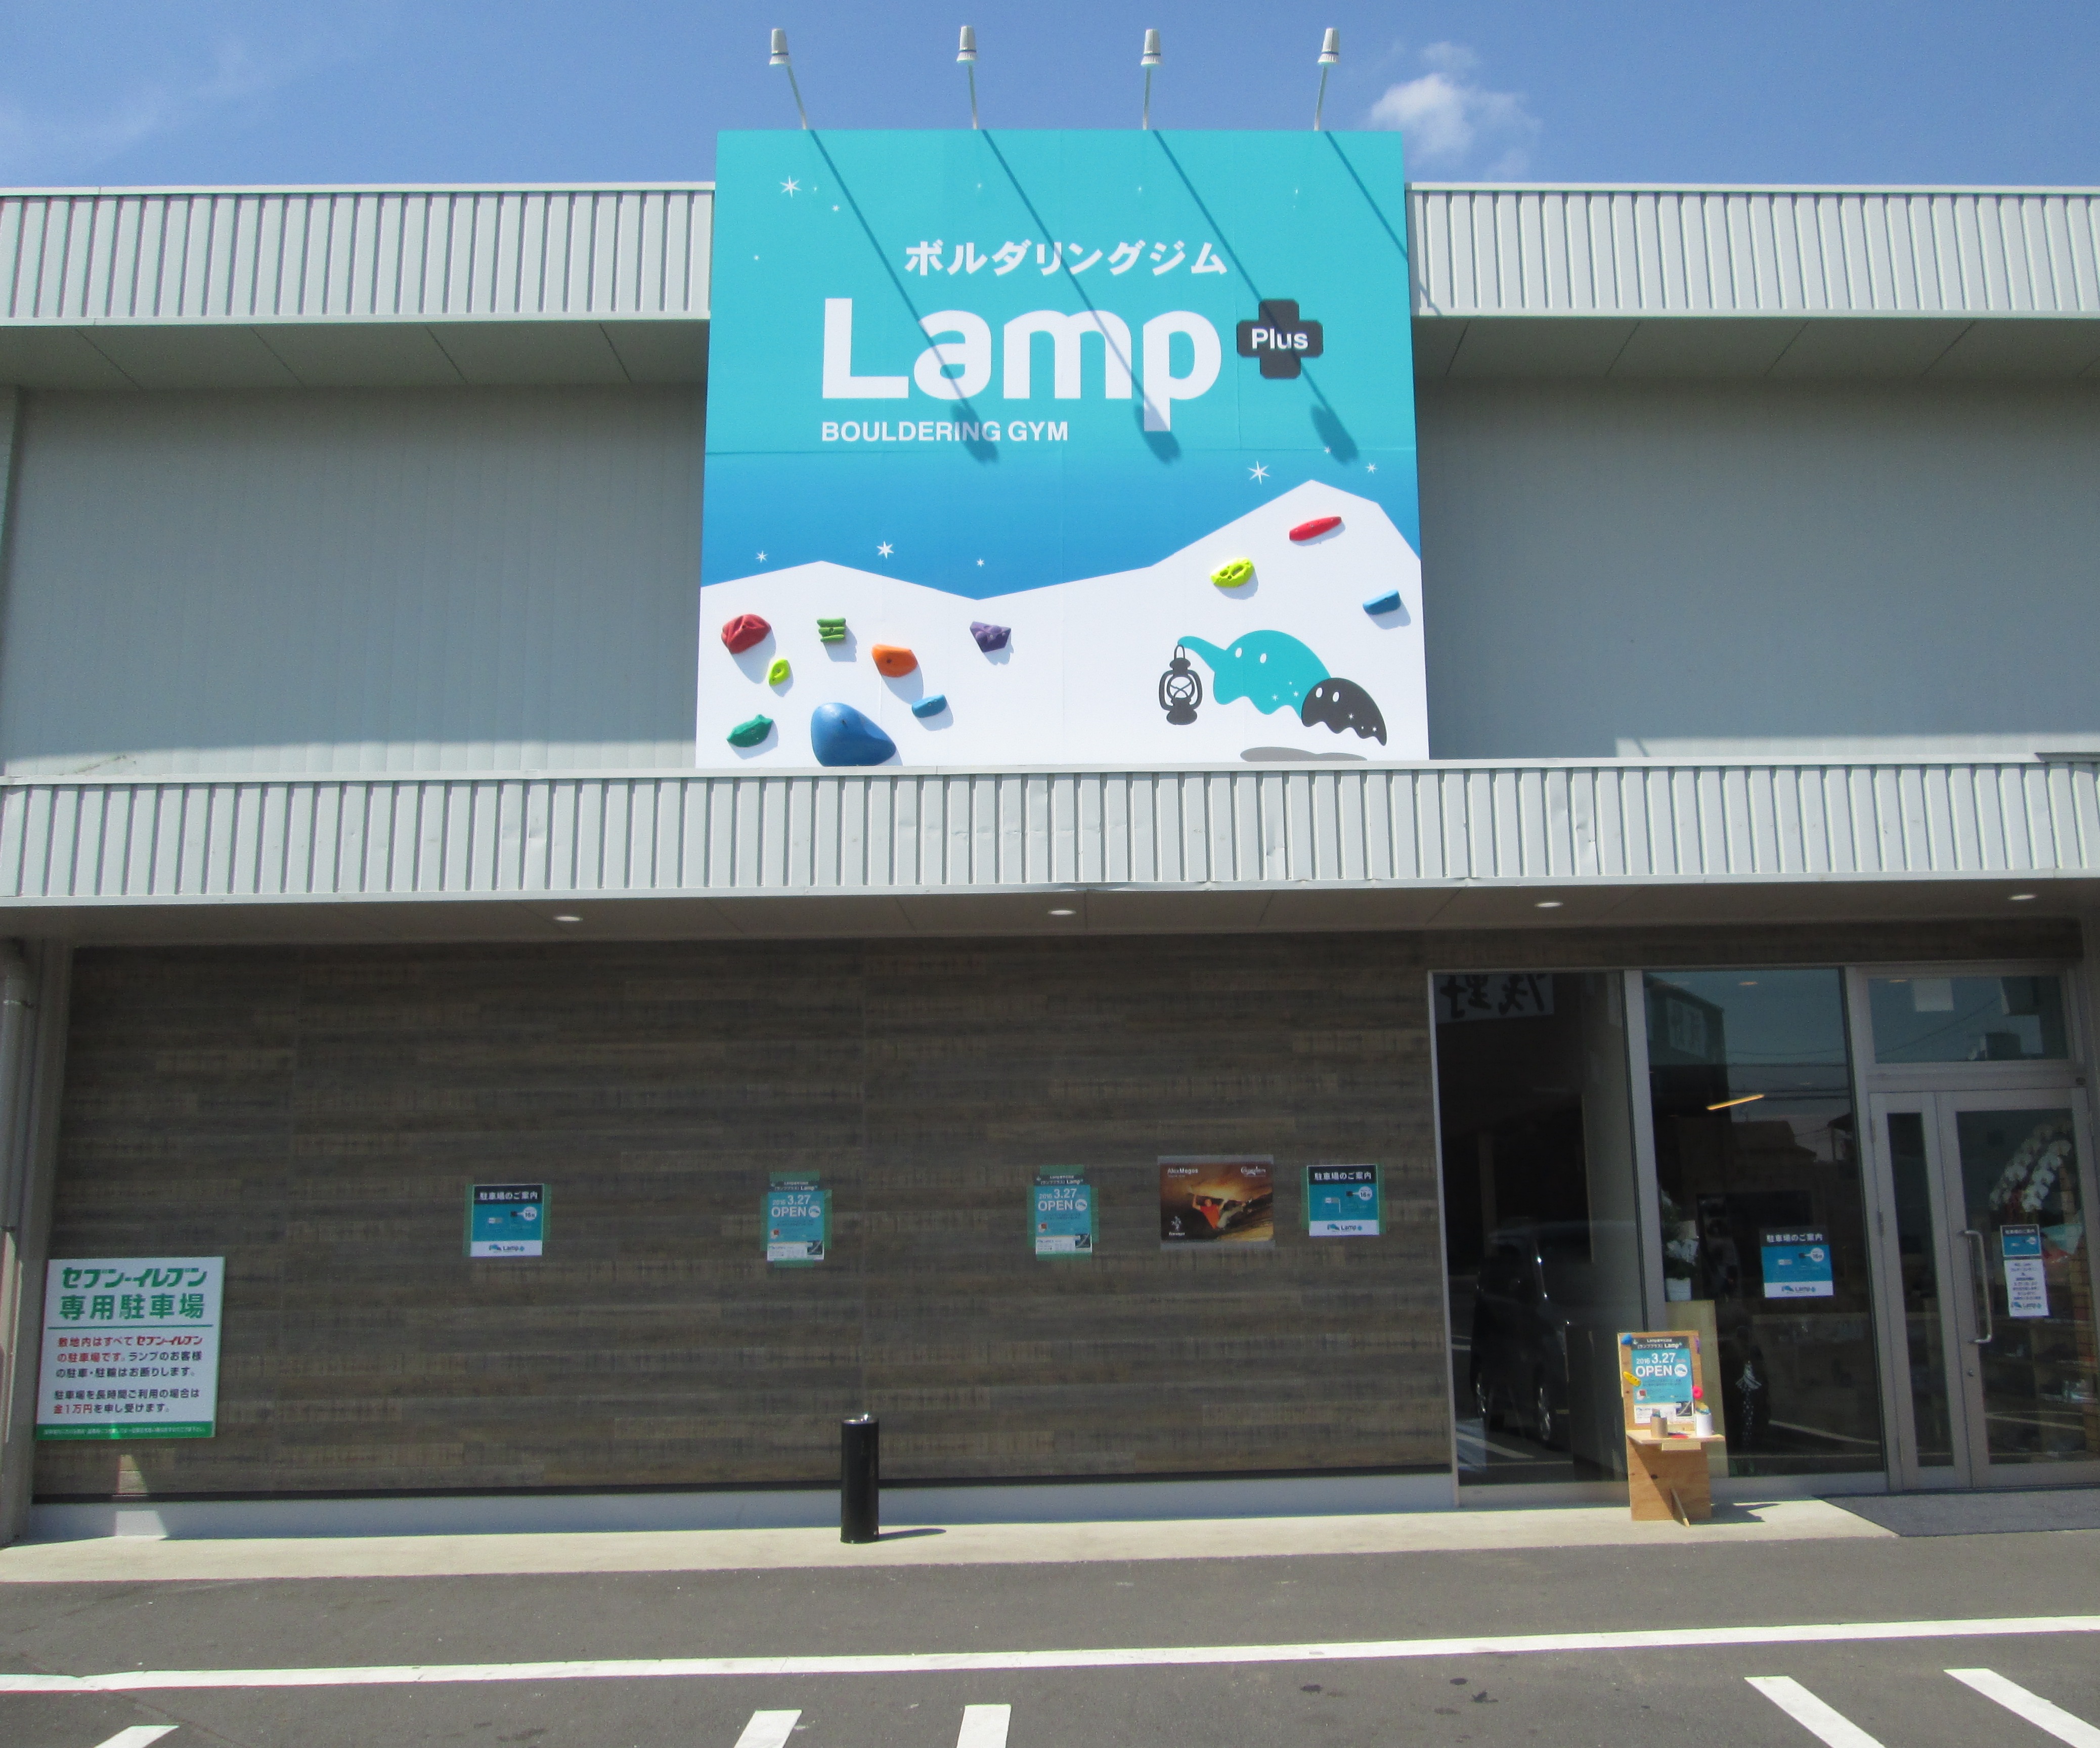 Lamp plus《ボルダリング》